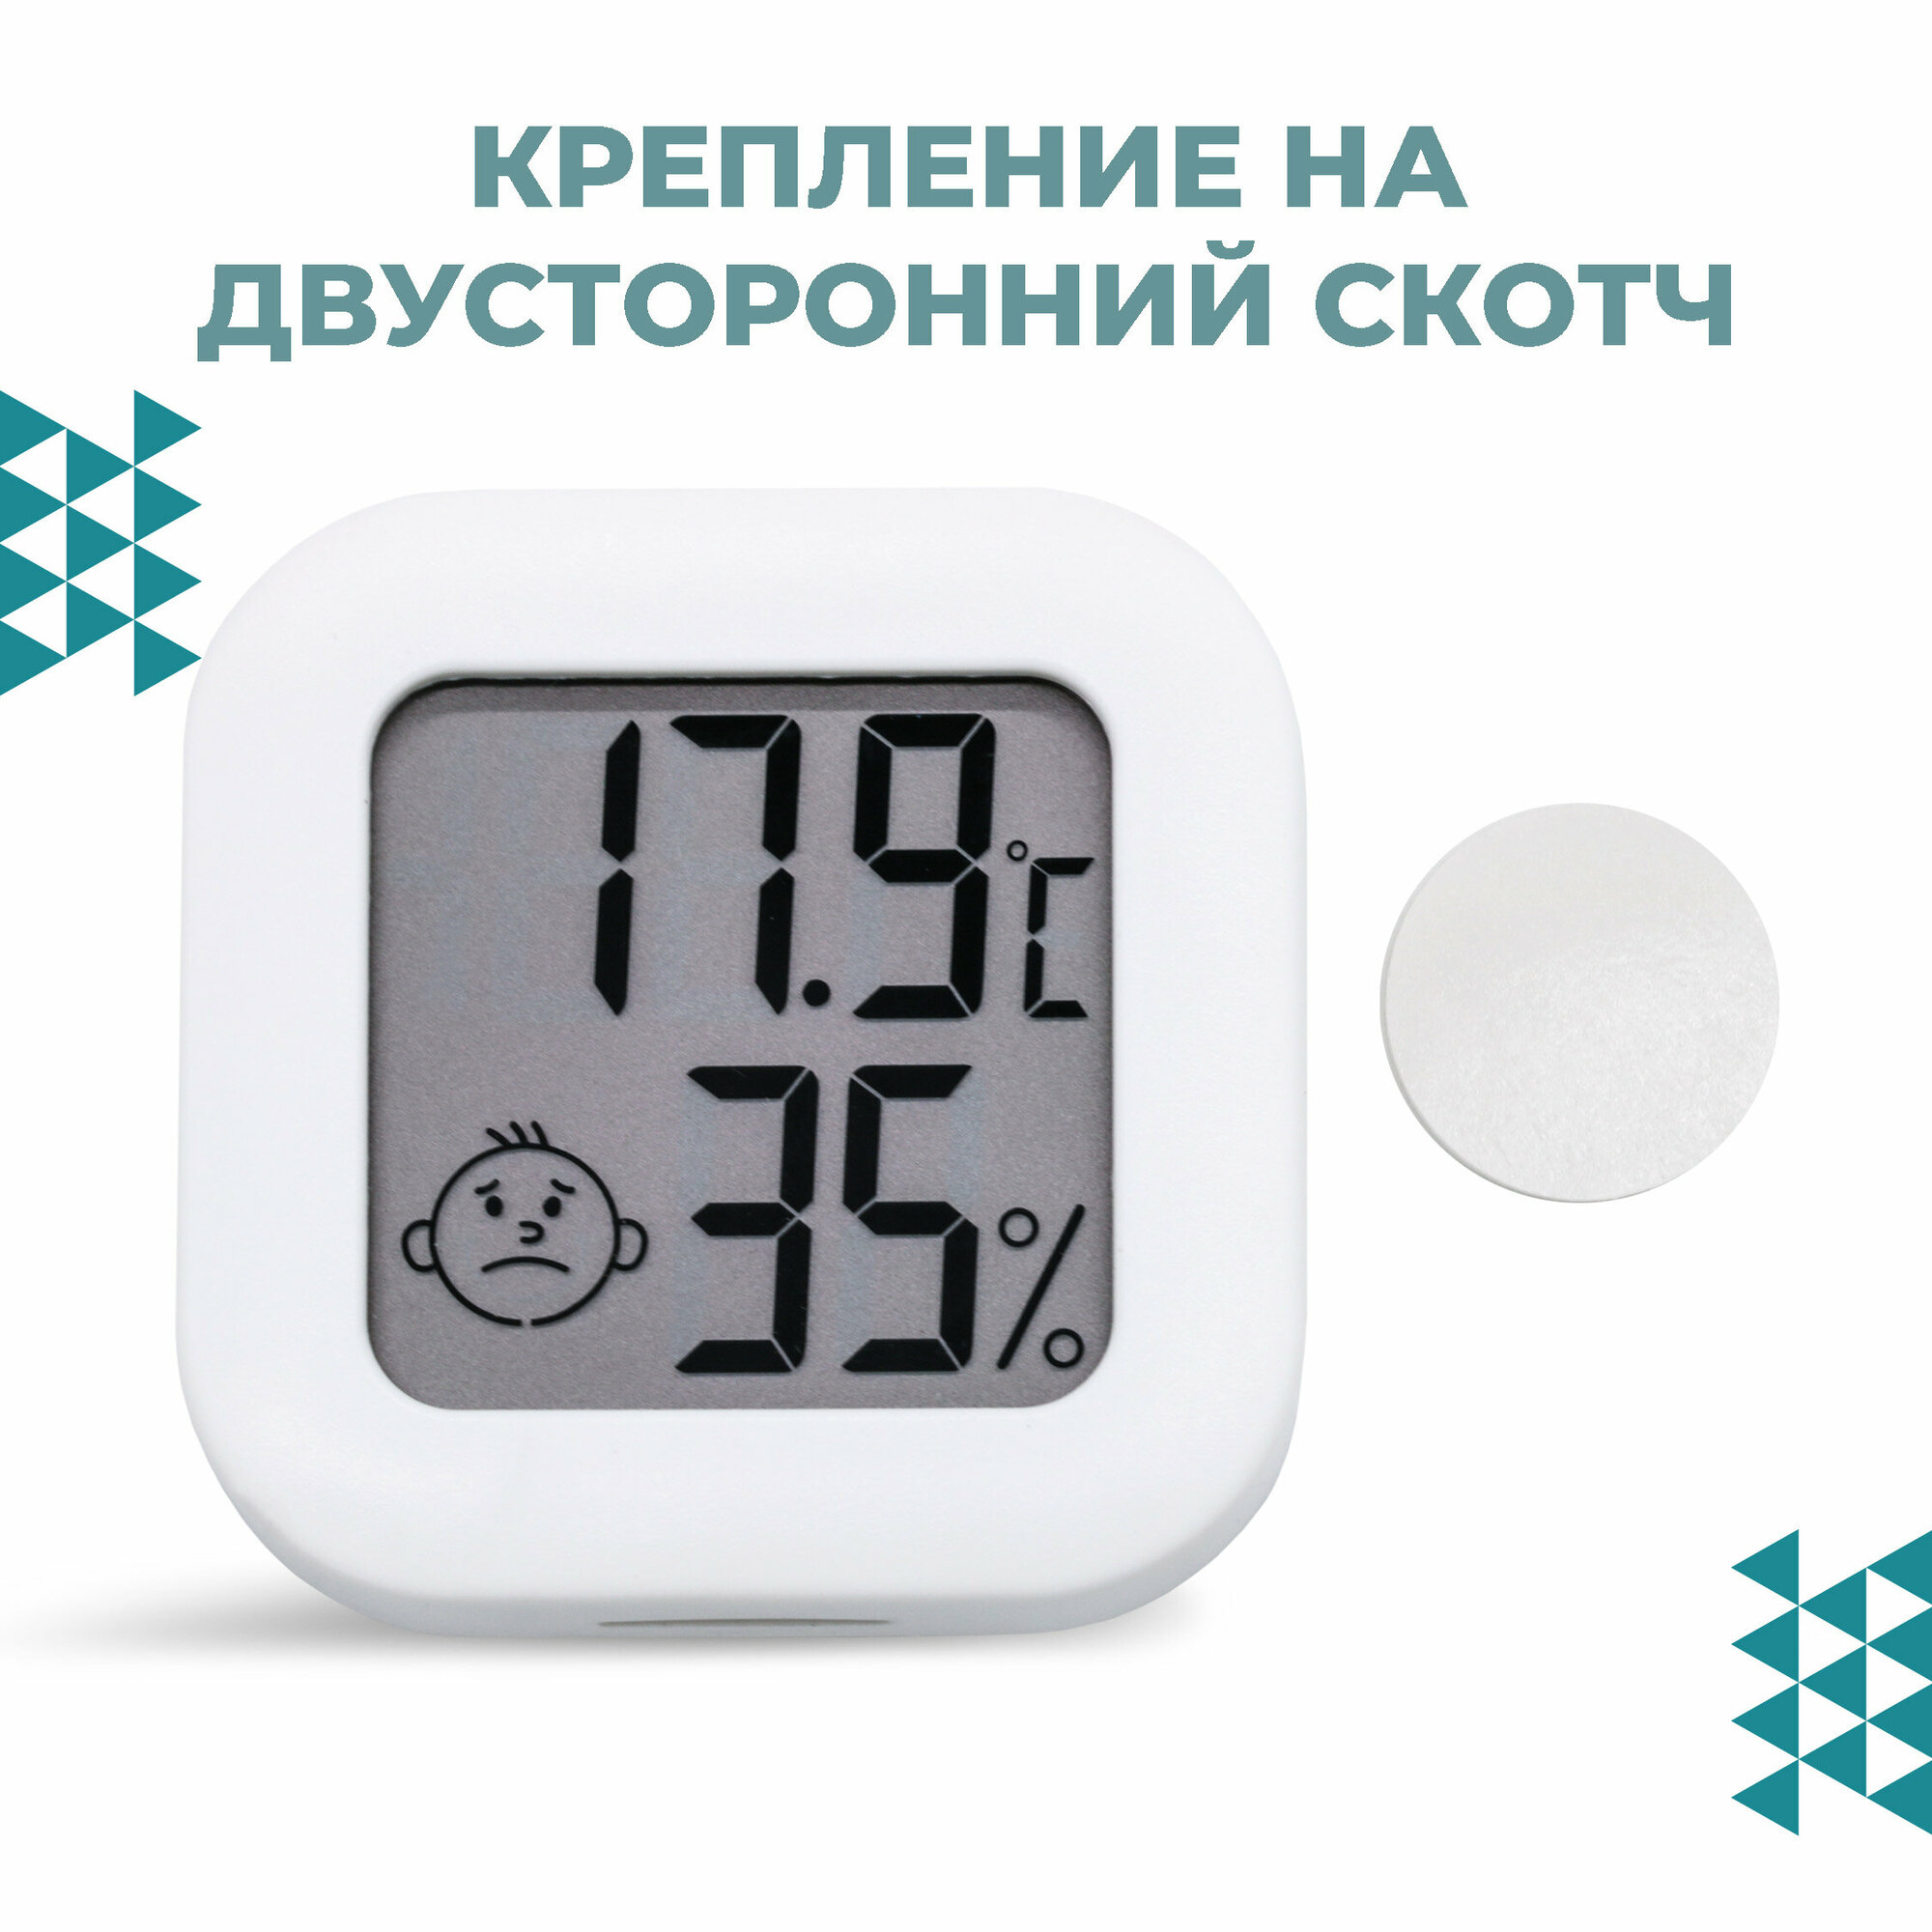 Гигрометр-термометр комнатный Boomshakalaka, для детской комнаты, спальни, кабинета, цвет белый